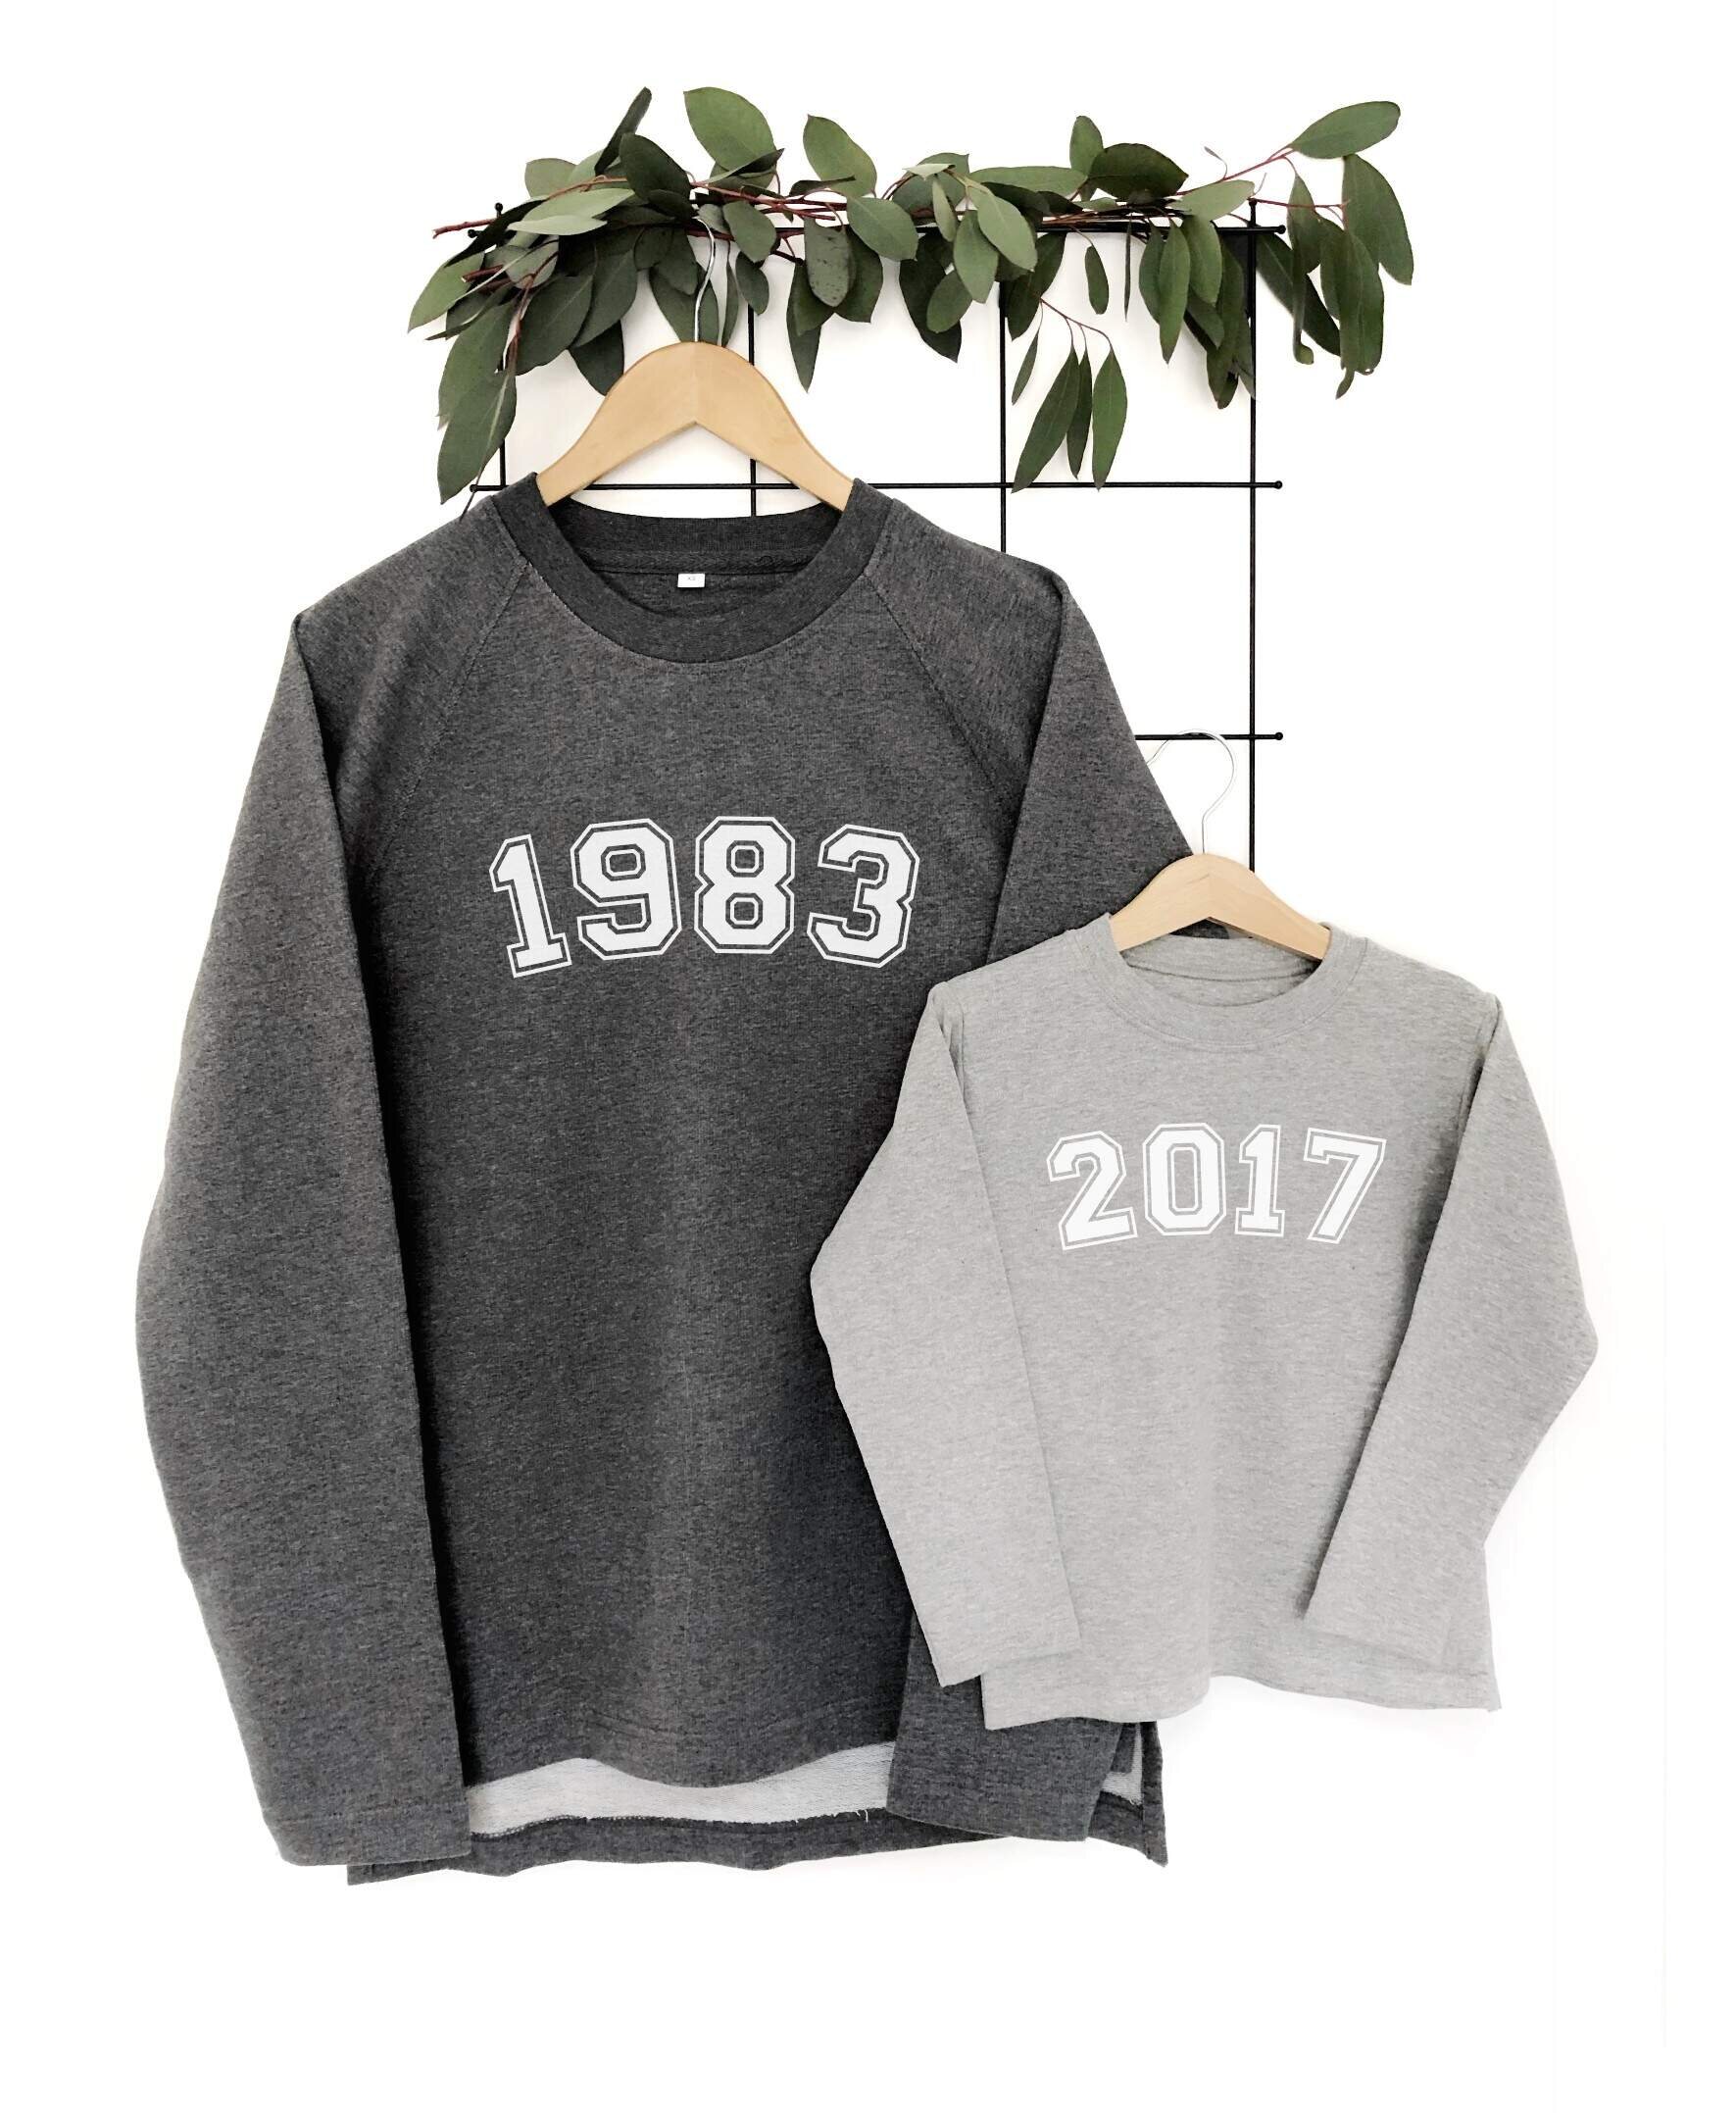 Birth Year Sweatshirt.jpg